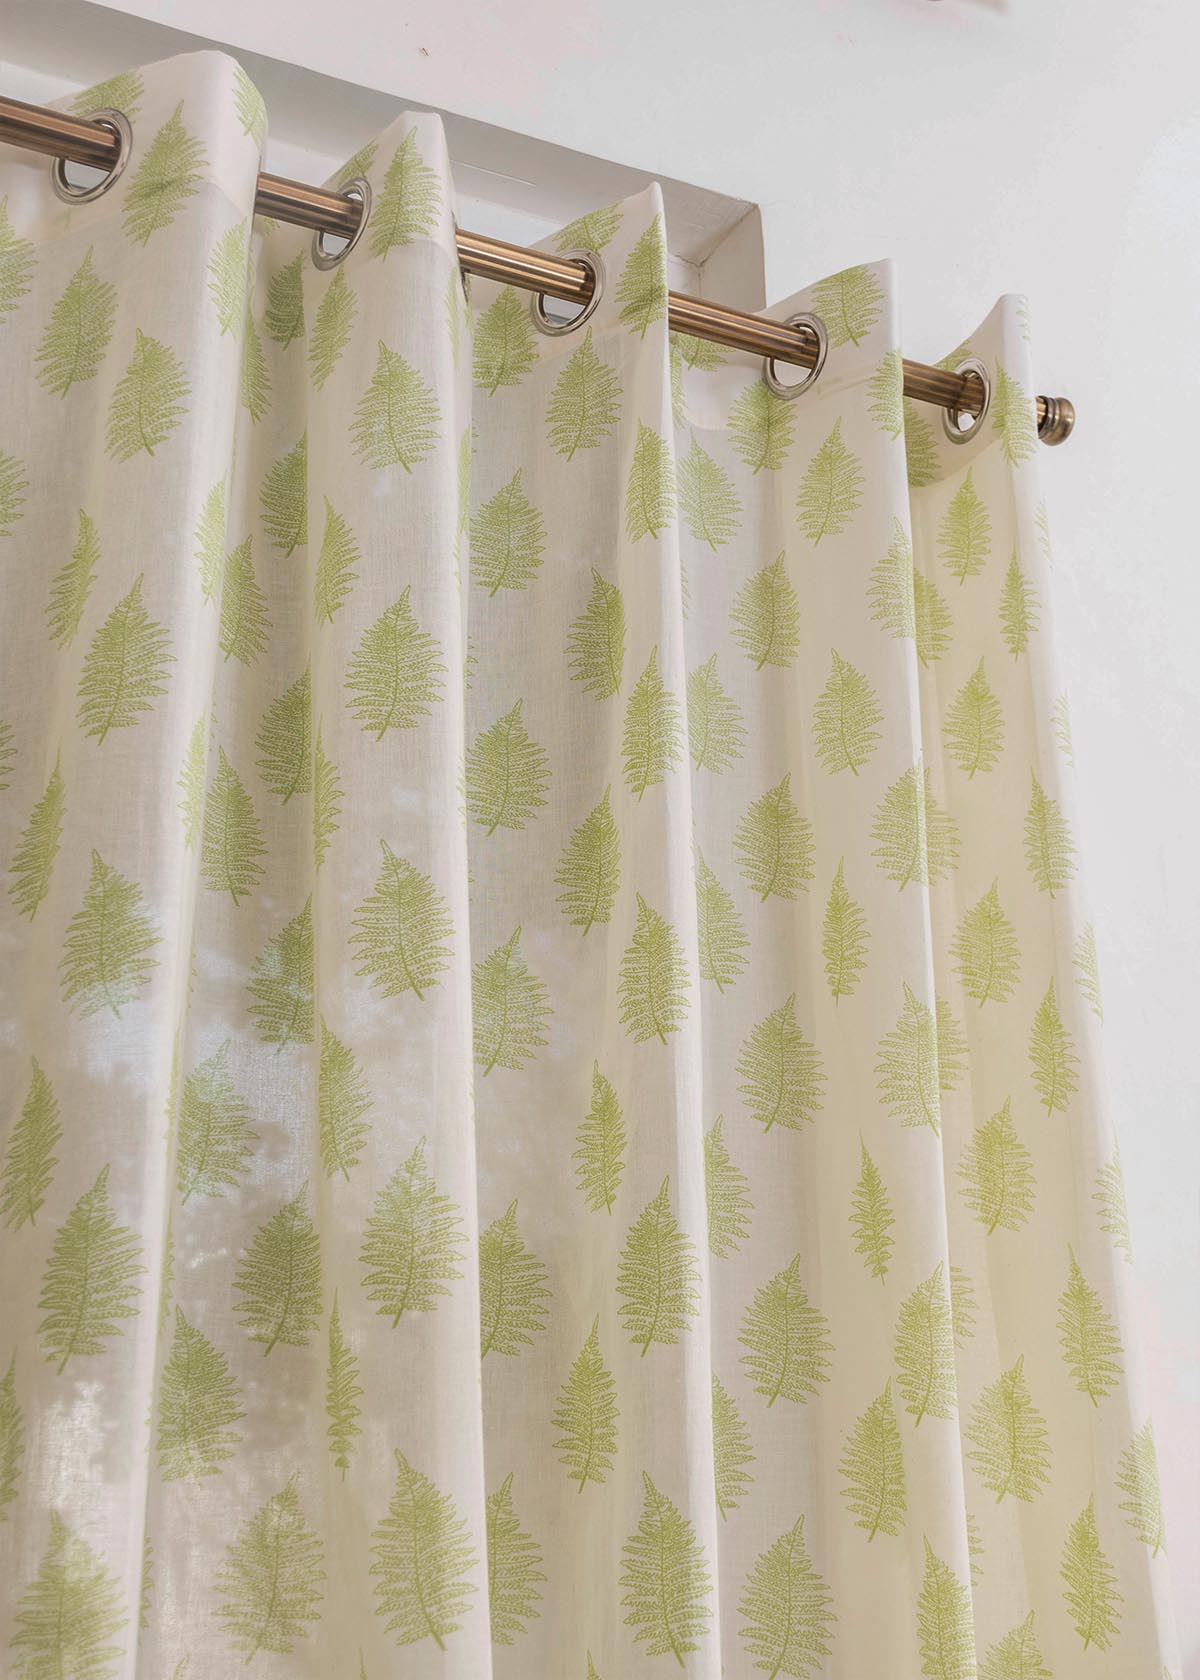 Floating Ferns 100% Sheer floral curtain for Living room & bedroom - Light filtering - Green